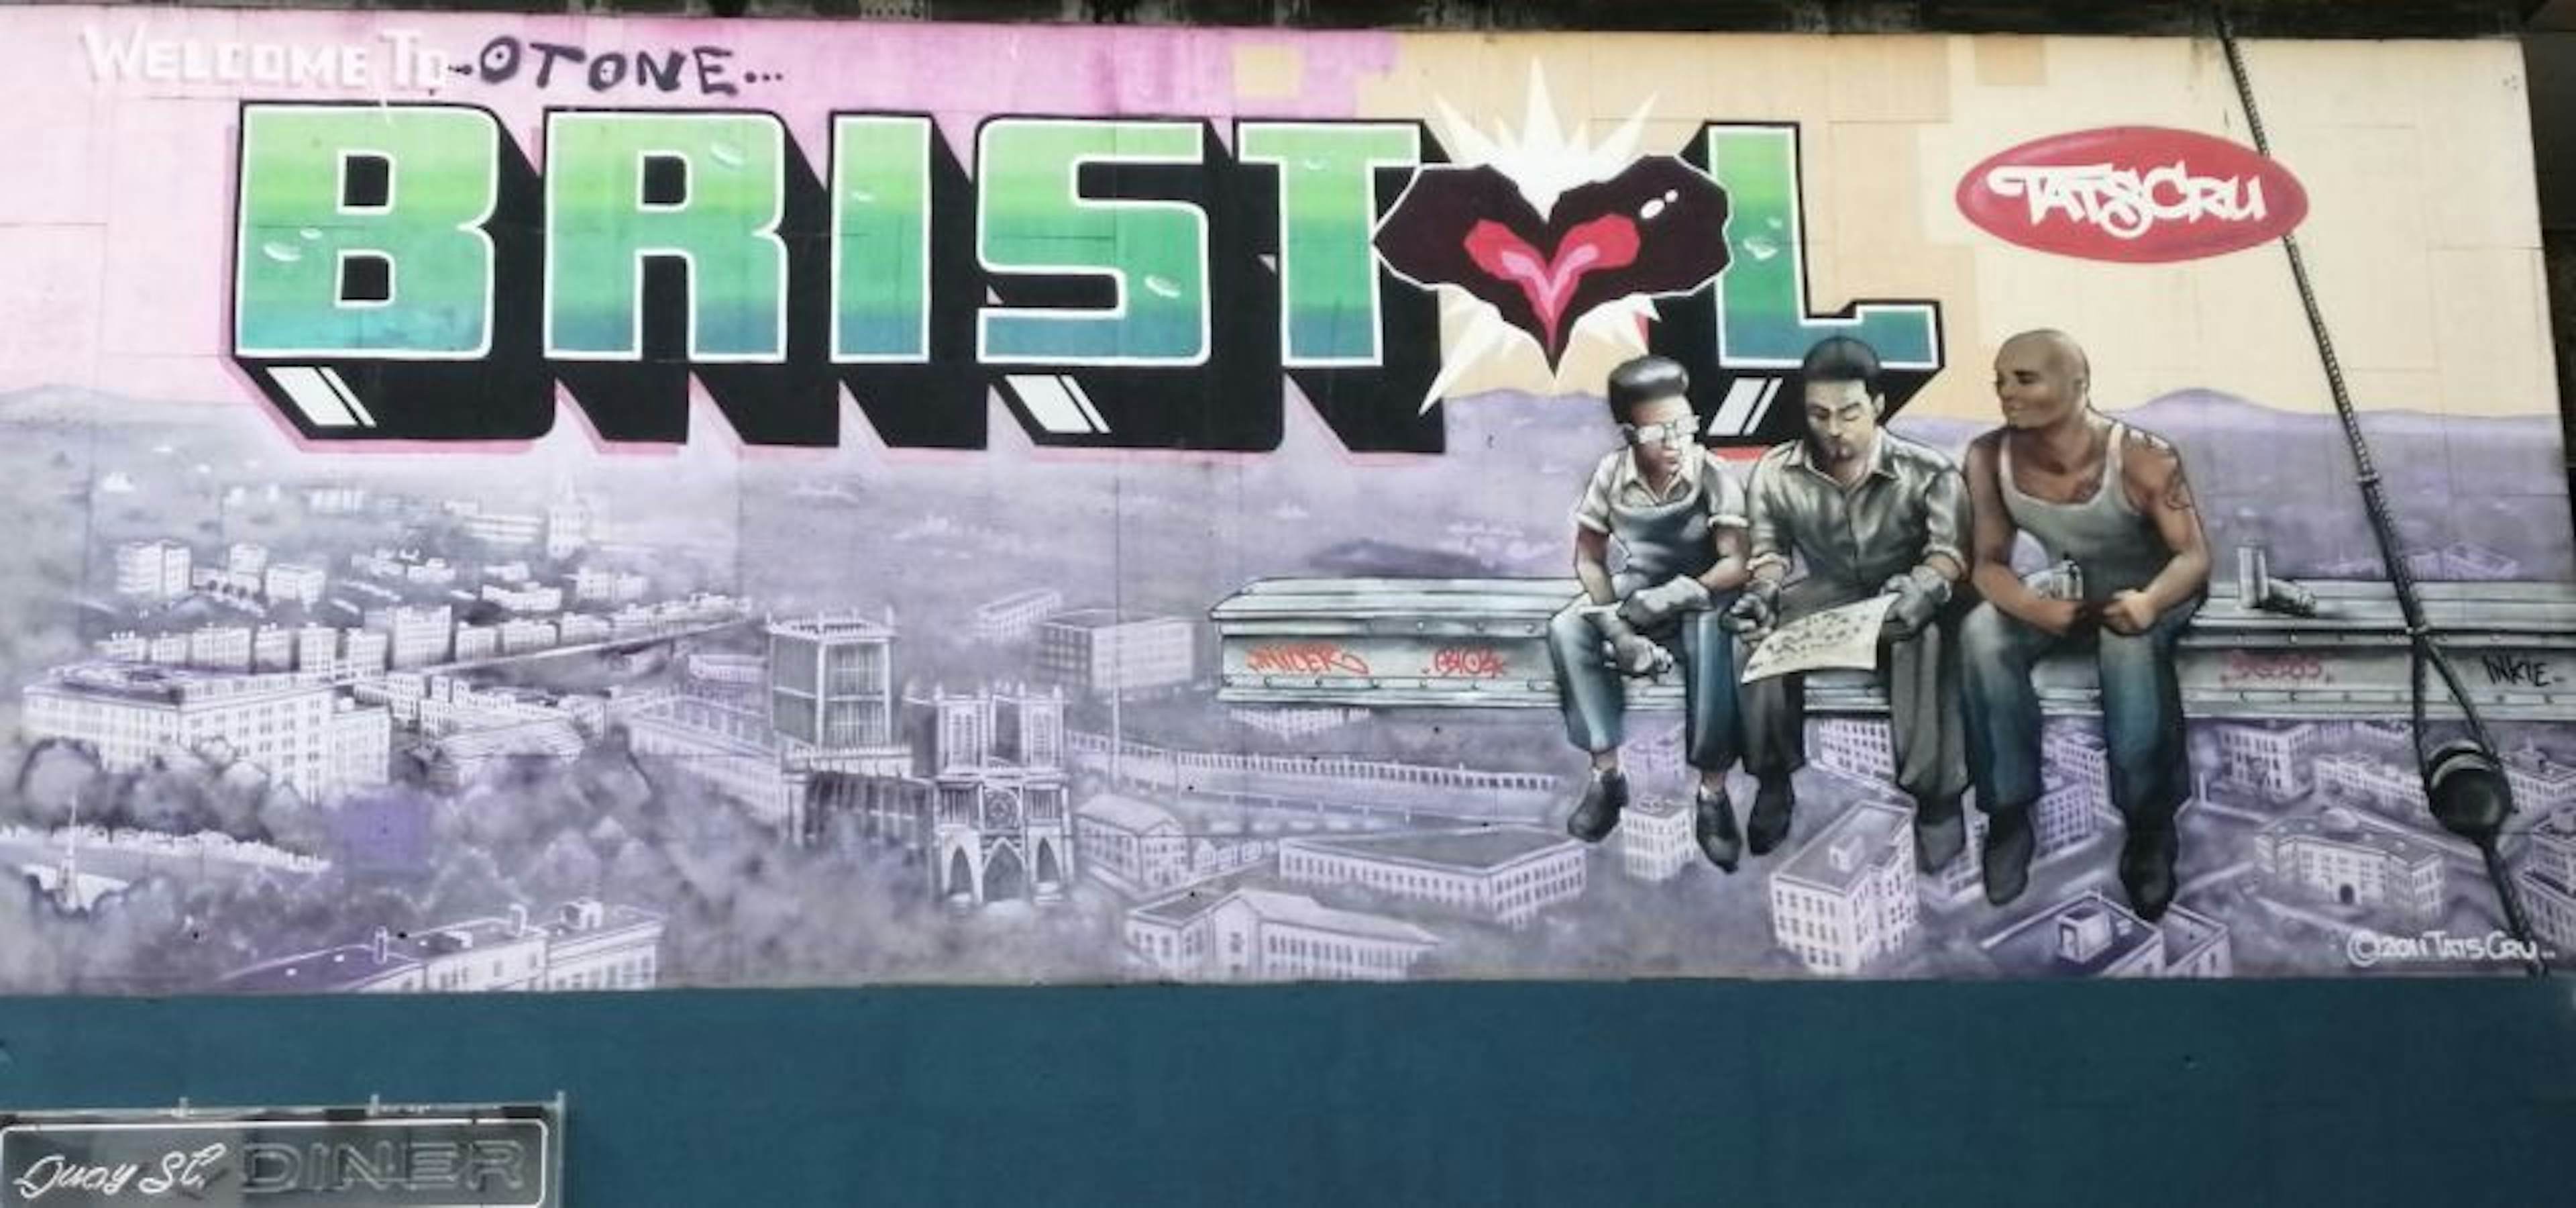 Street Art Bristol: A Trip through the Graffiti Capital image